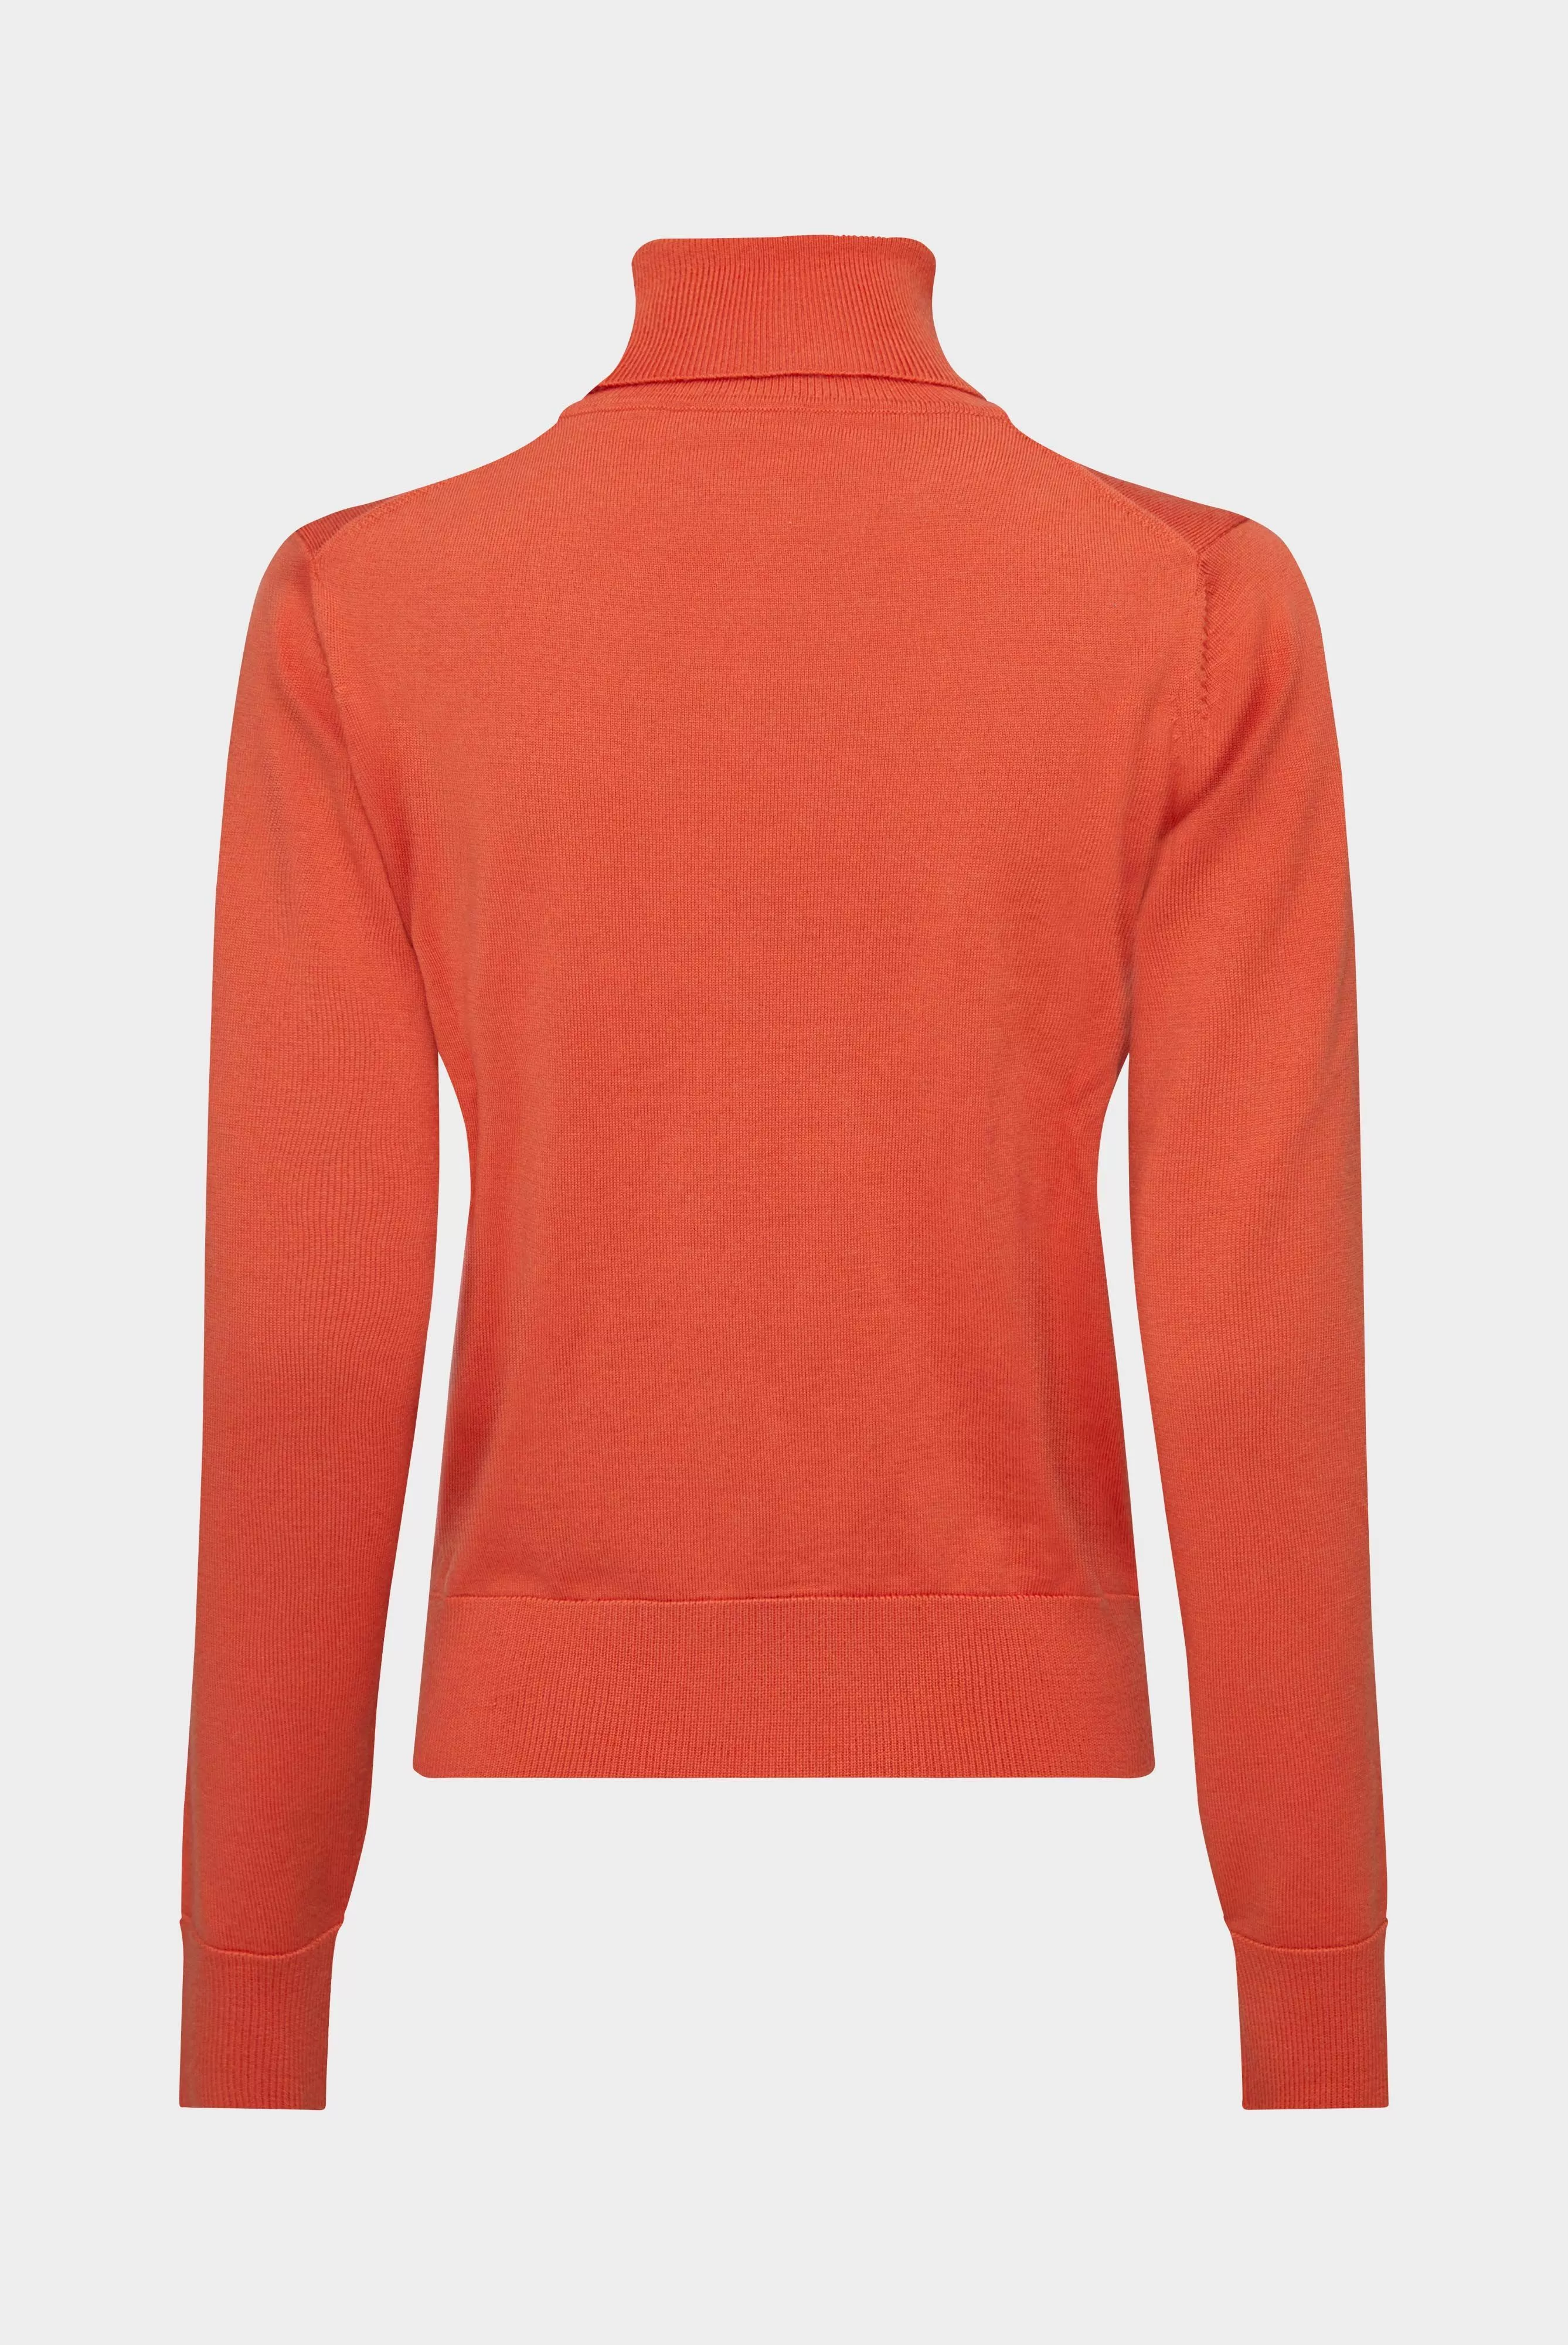 пуловер SATHE оранжевый SATHE_S00219_360 ,photo 3